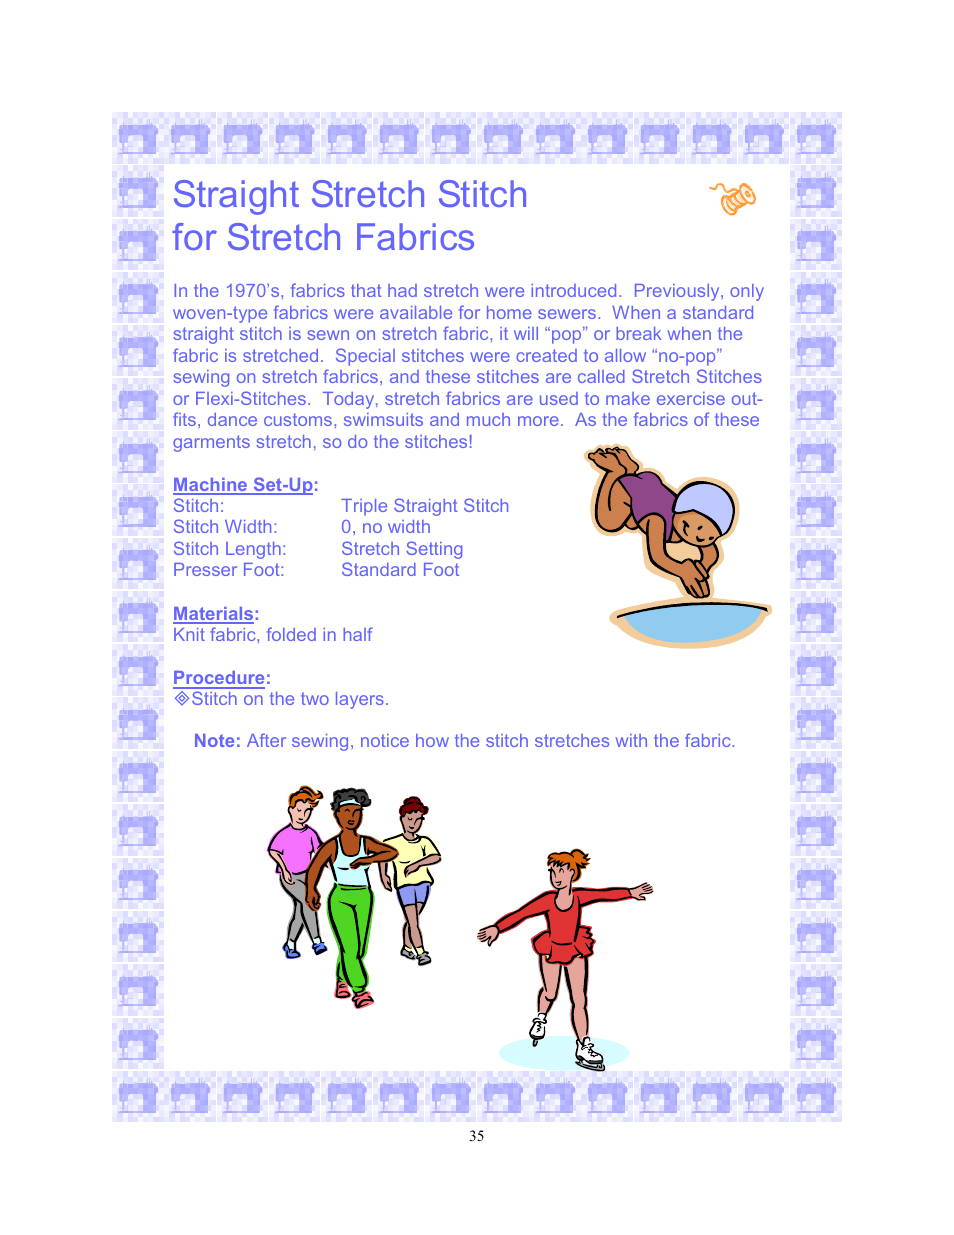 Straight stretch stitch for stretch fabrics | SINGER 6550-WORKBOOK Scholastic User Manual | Page 39 / 59